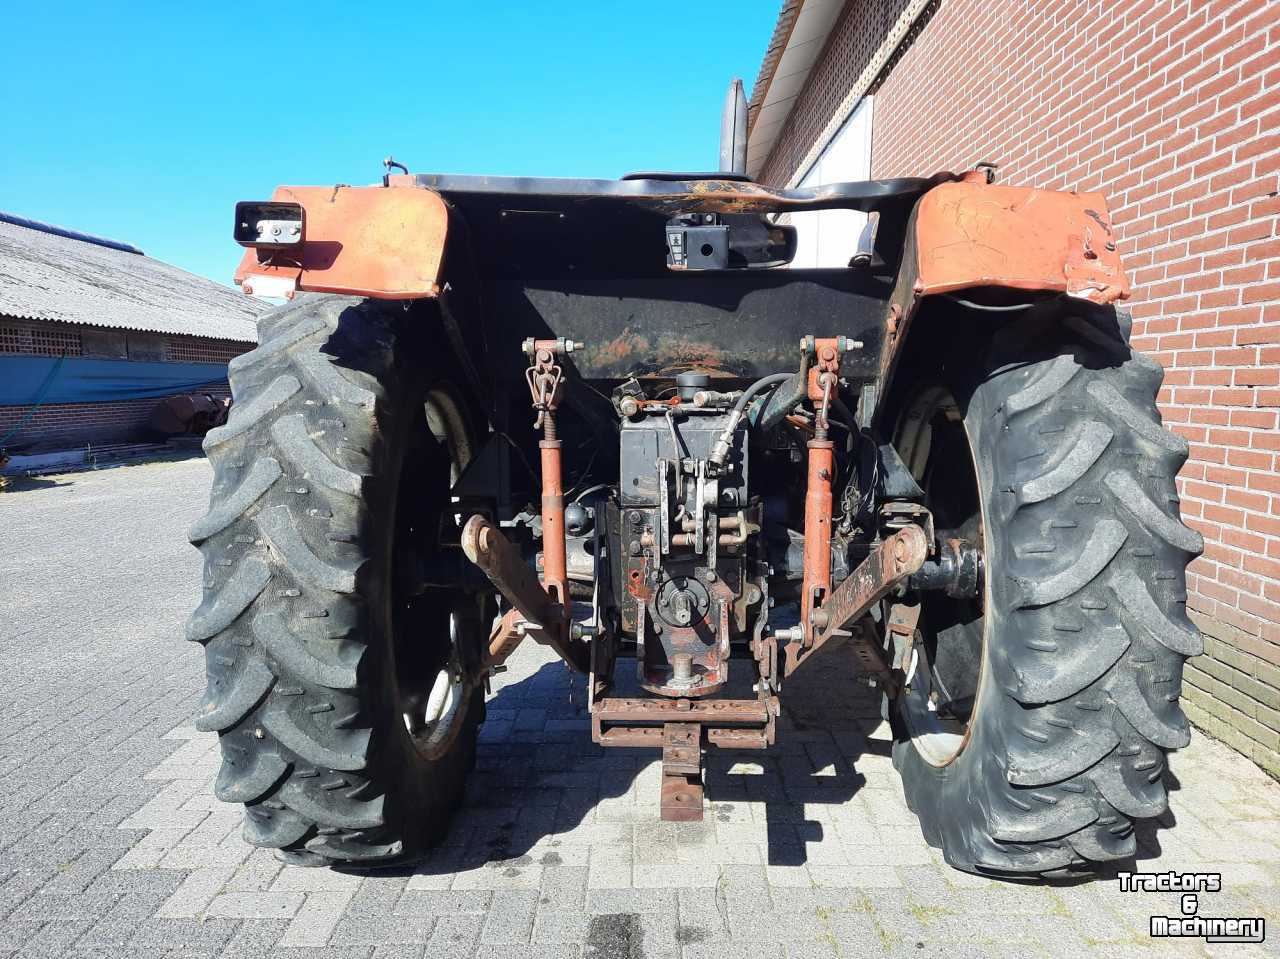 Tractors Case-IH 733 4wd